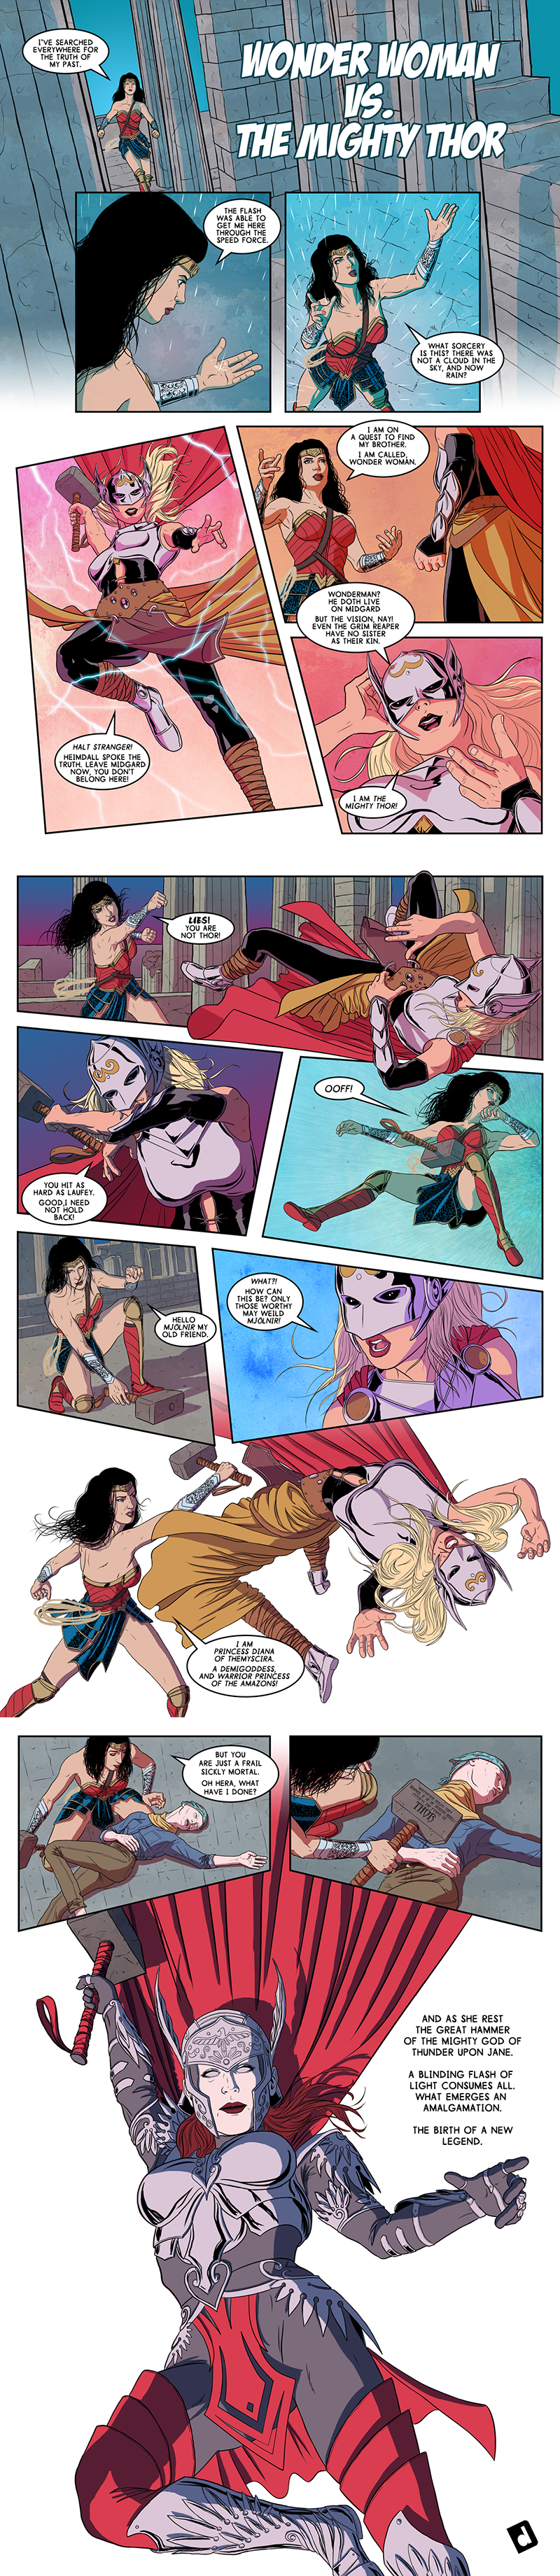 Wonder Woman vs. Thor (Jane Foster) by Duke